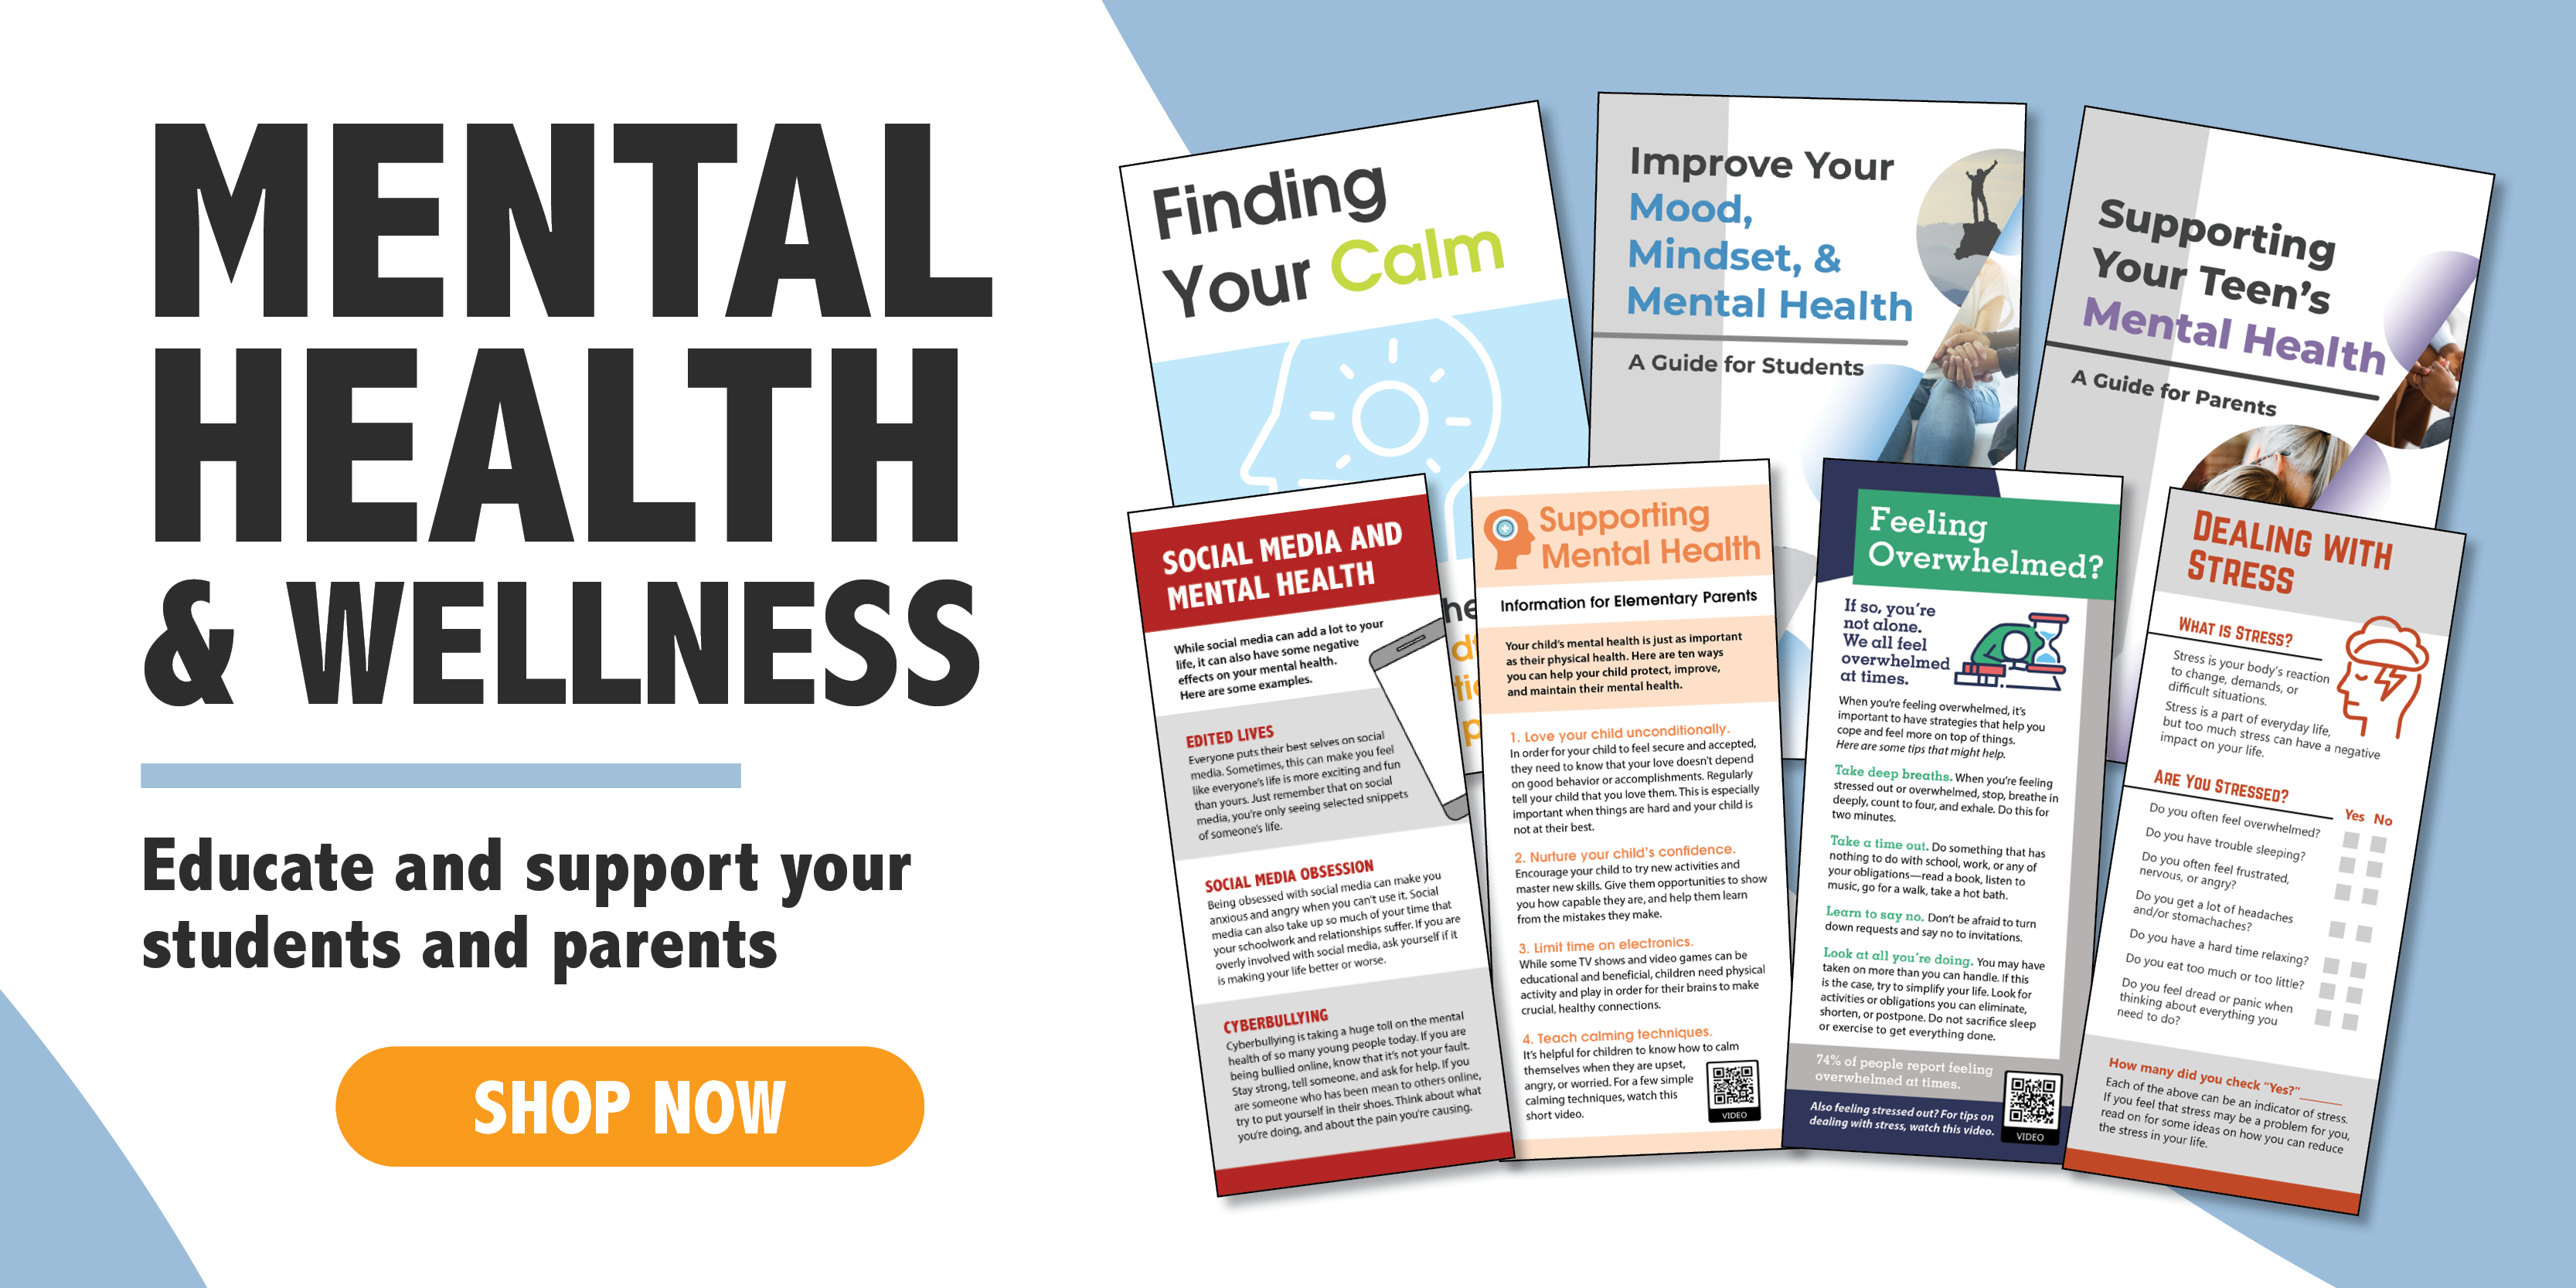 Mental Health & Wellness Resources